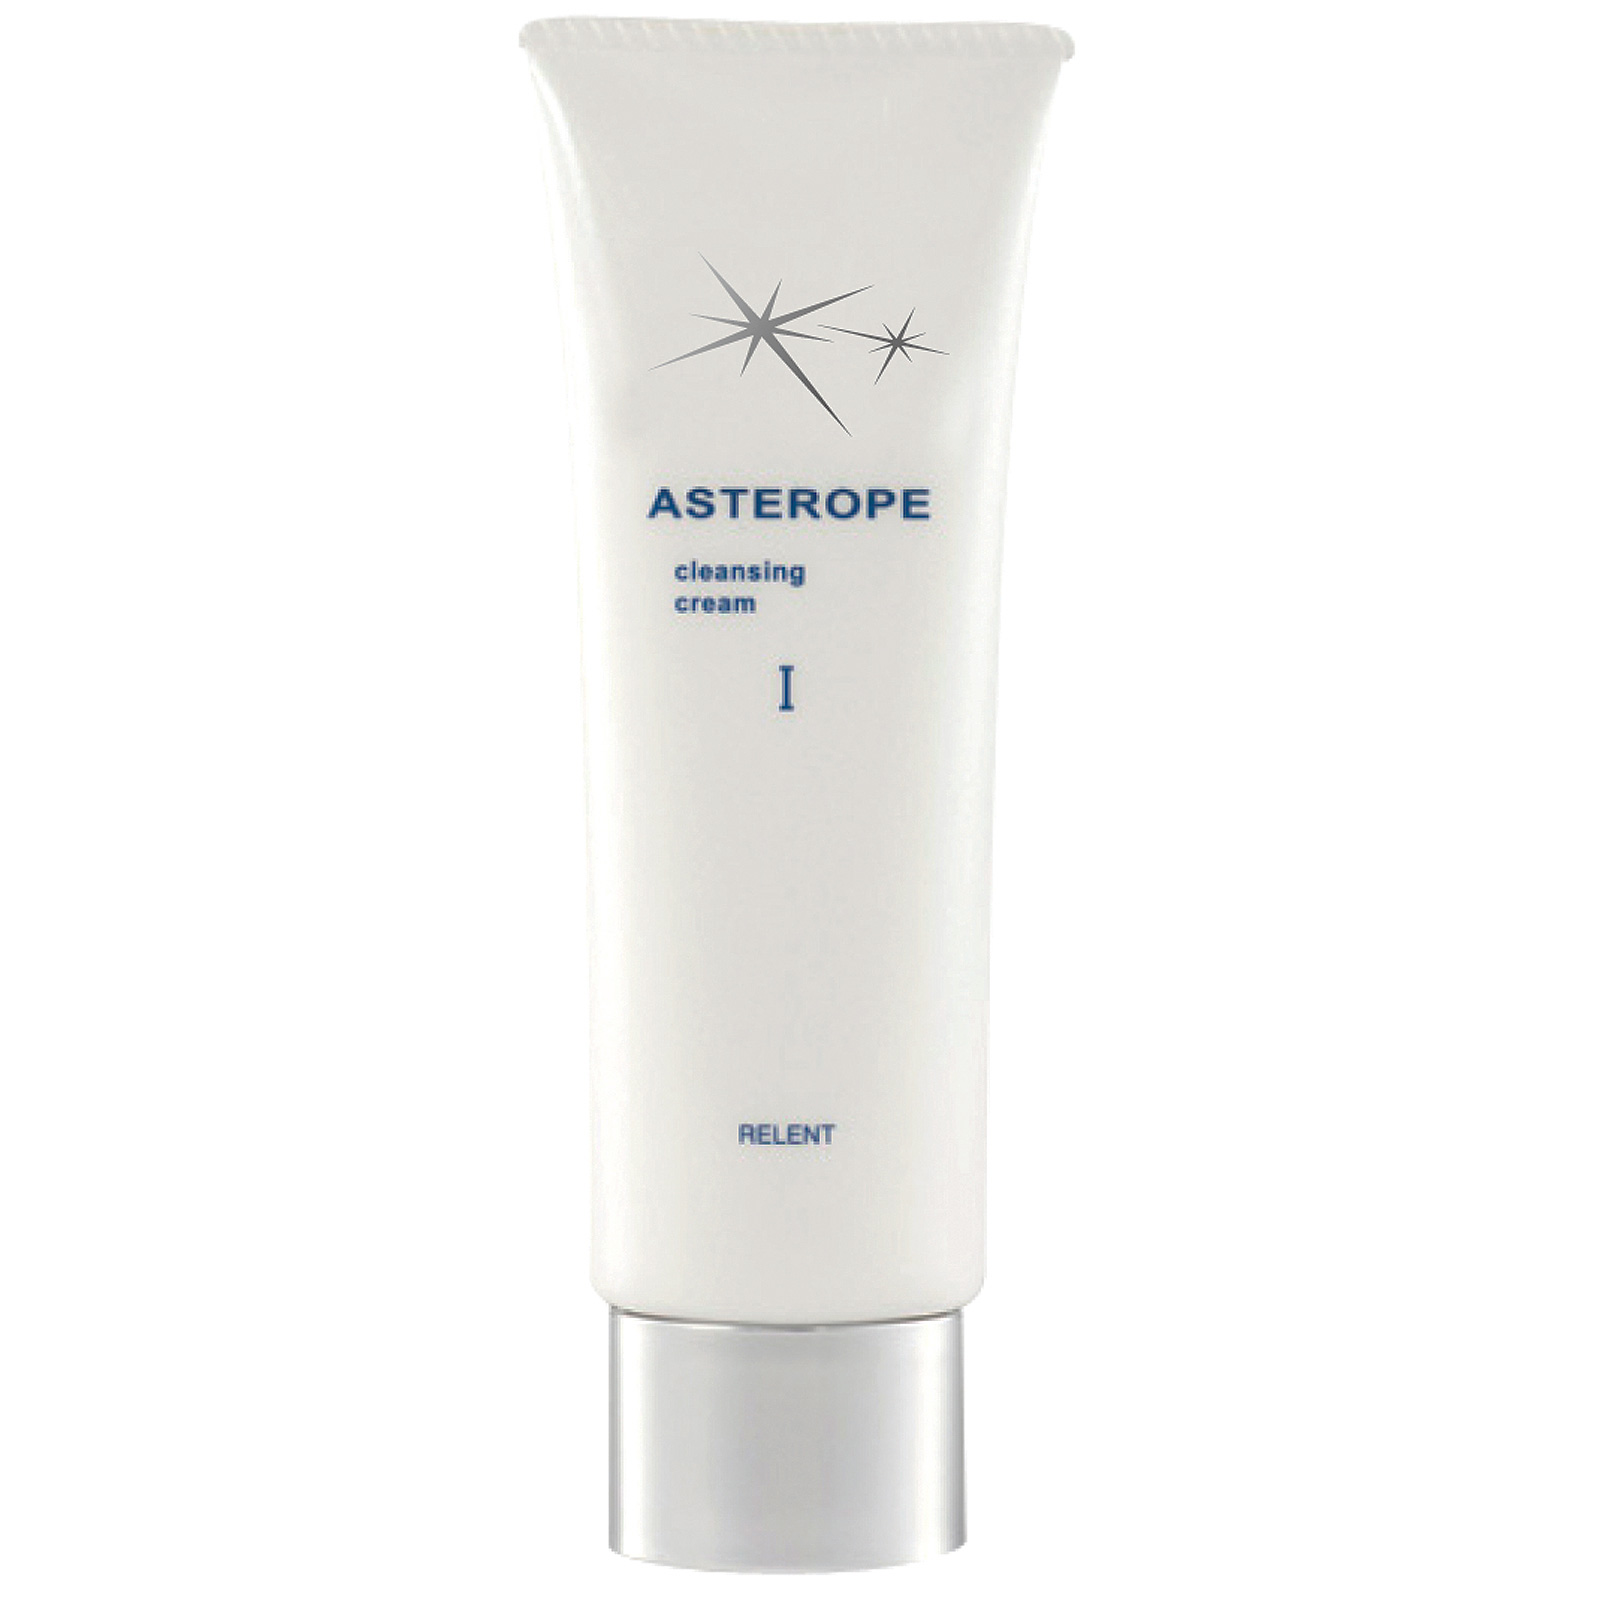 Asterope Cleansing Cream. Демакияжный крем Астеропа